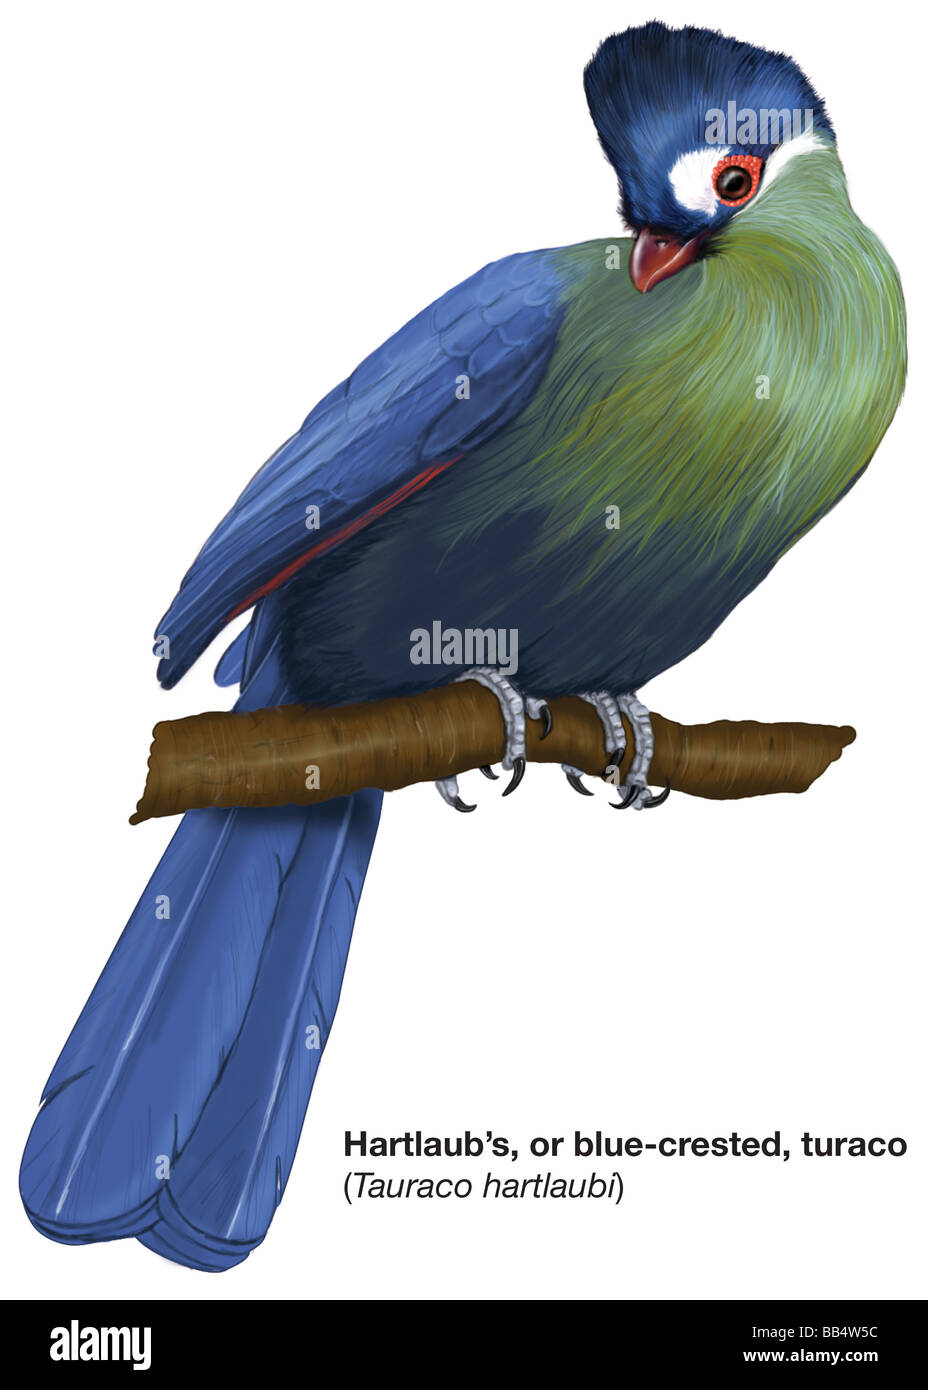 Hartlaub's or blue-crested turaco (Tauraco hartlaubi) Stock Photo